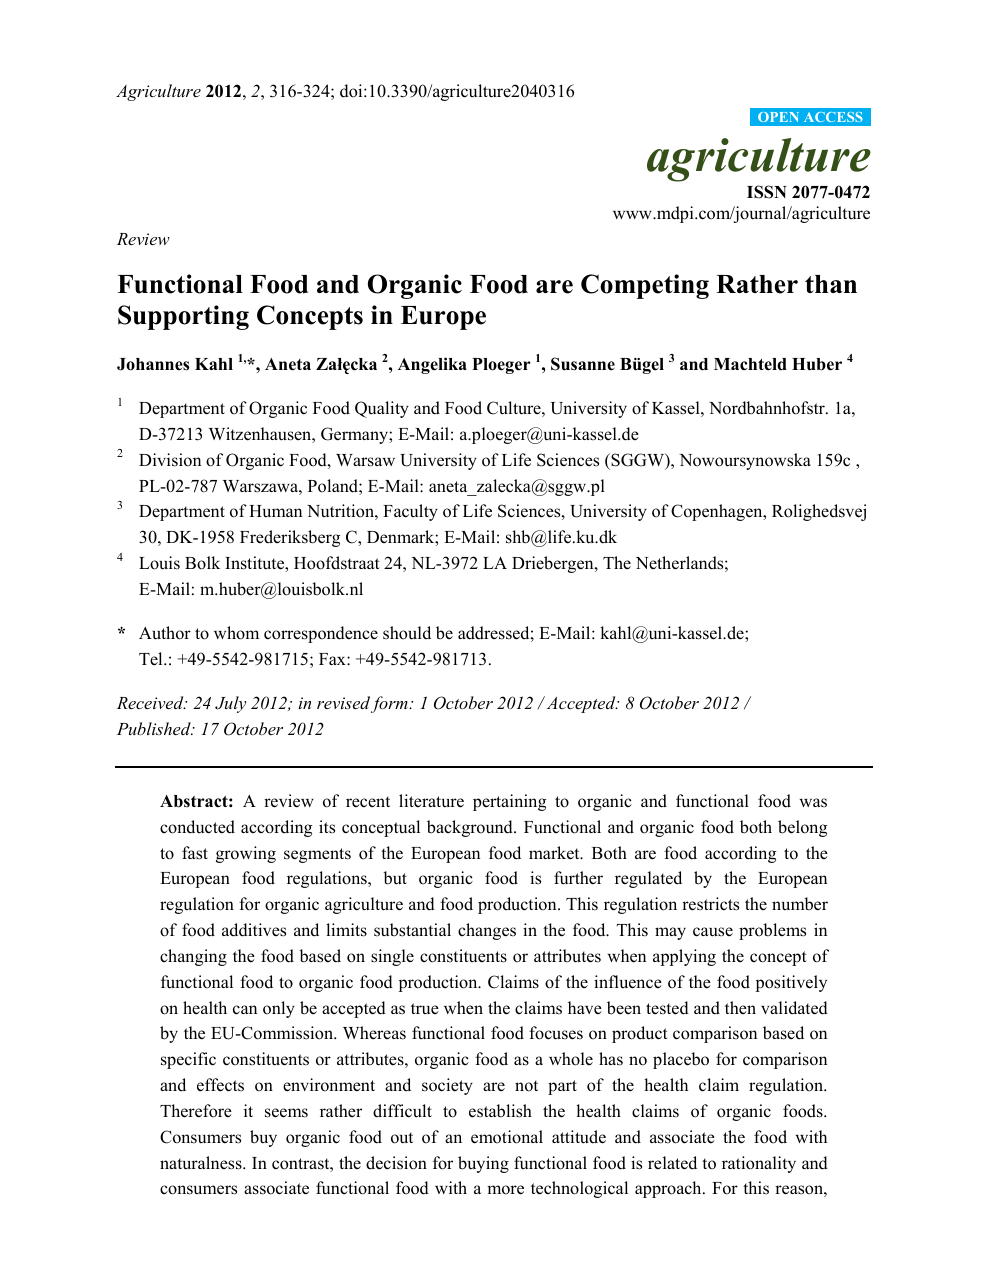 organic food research paper